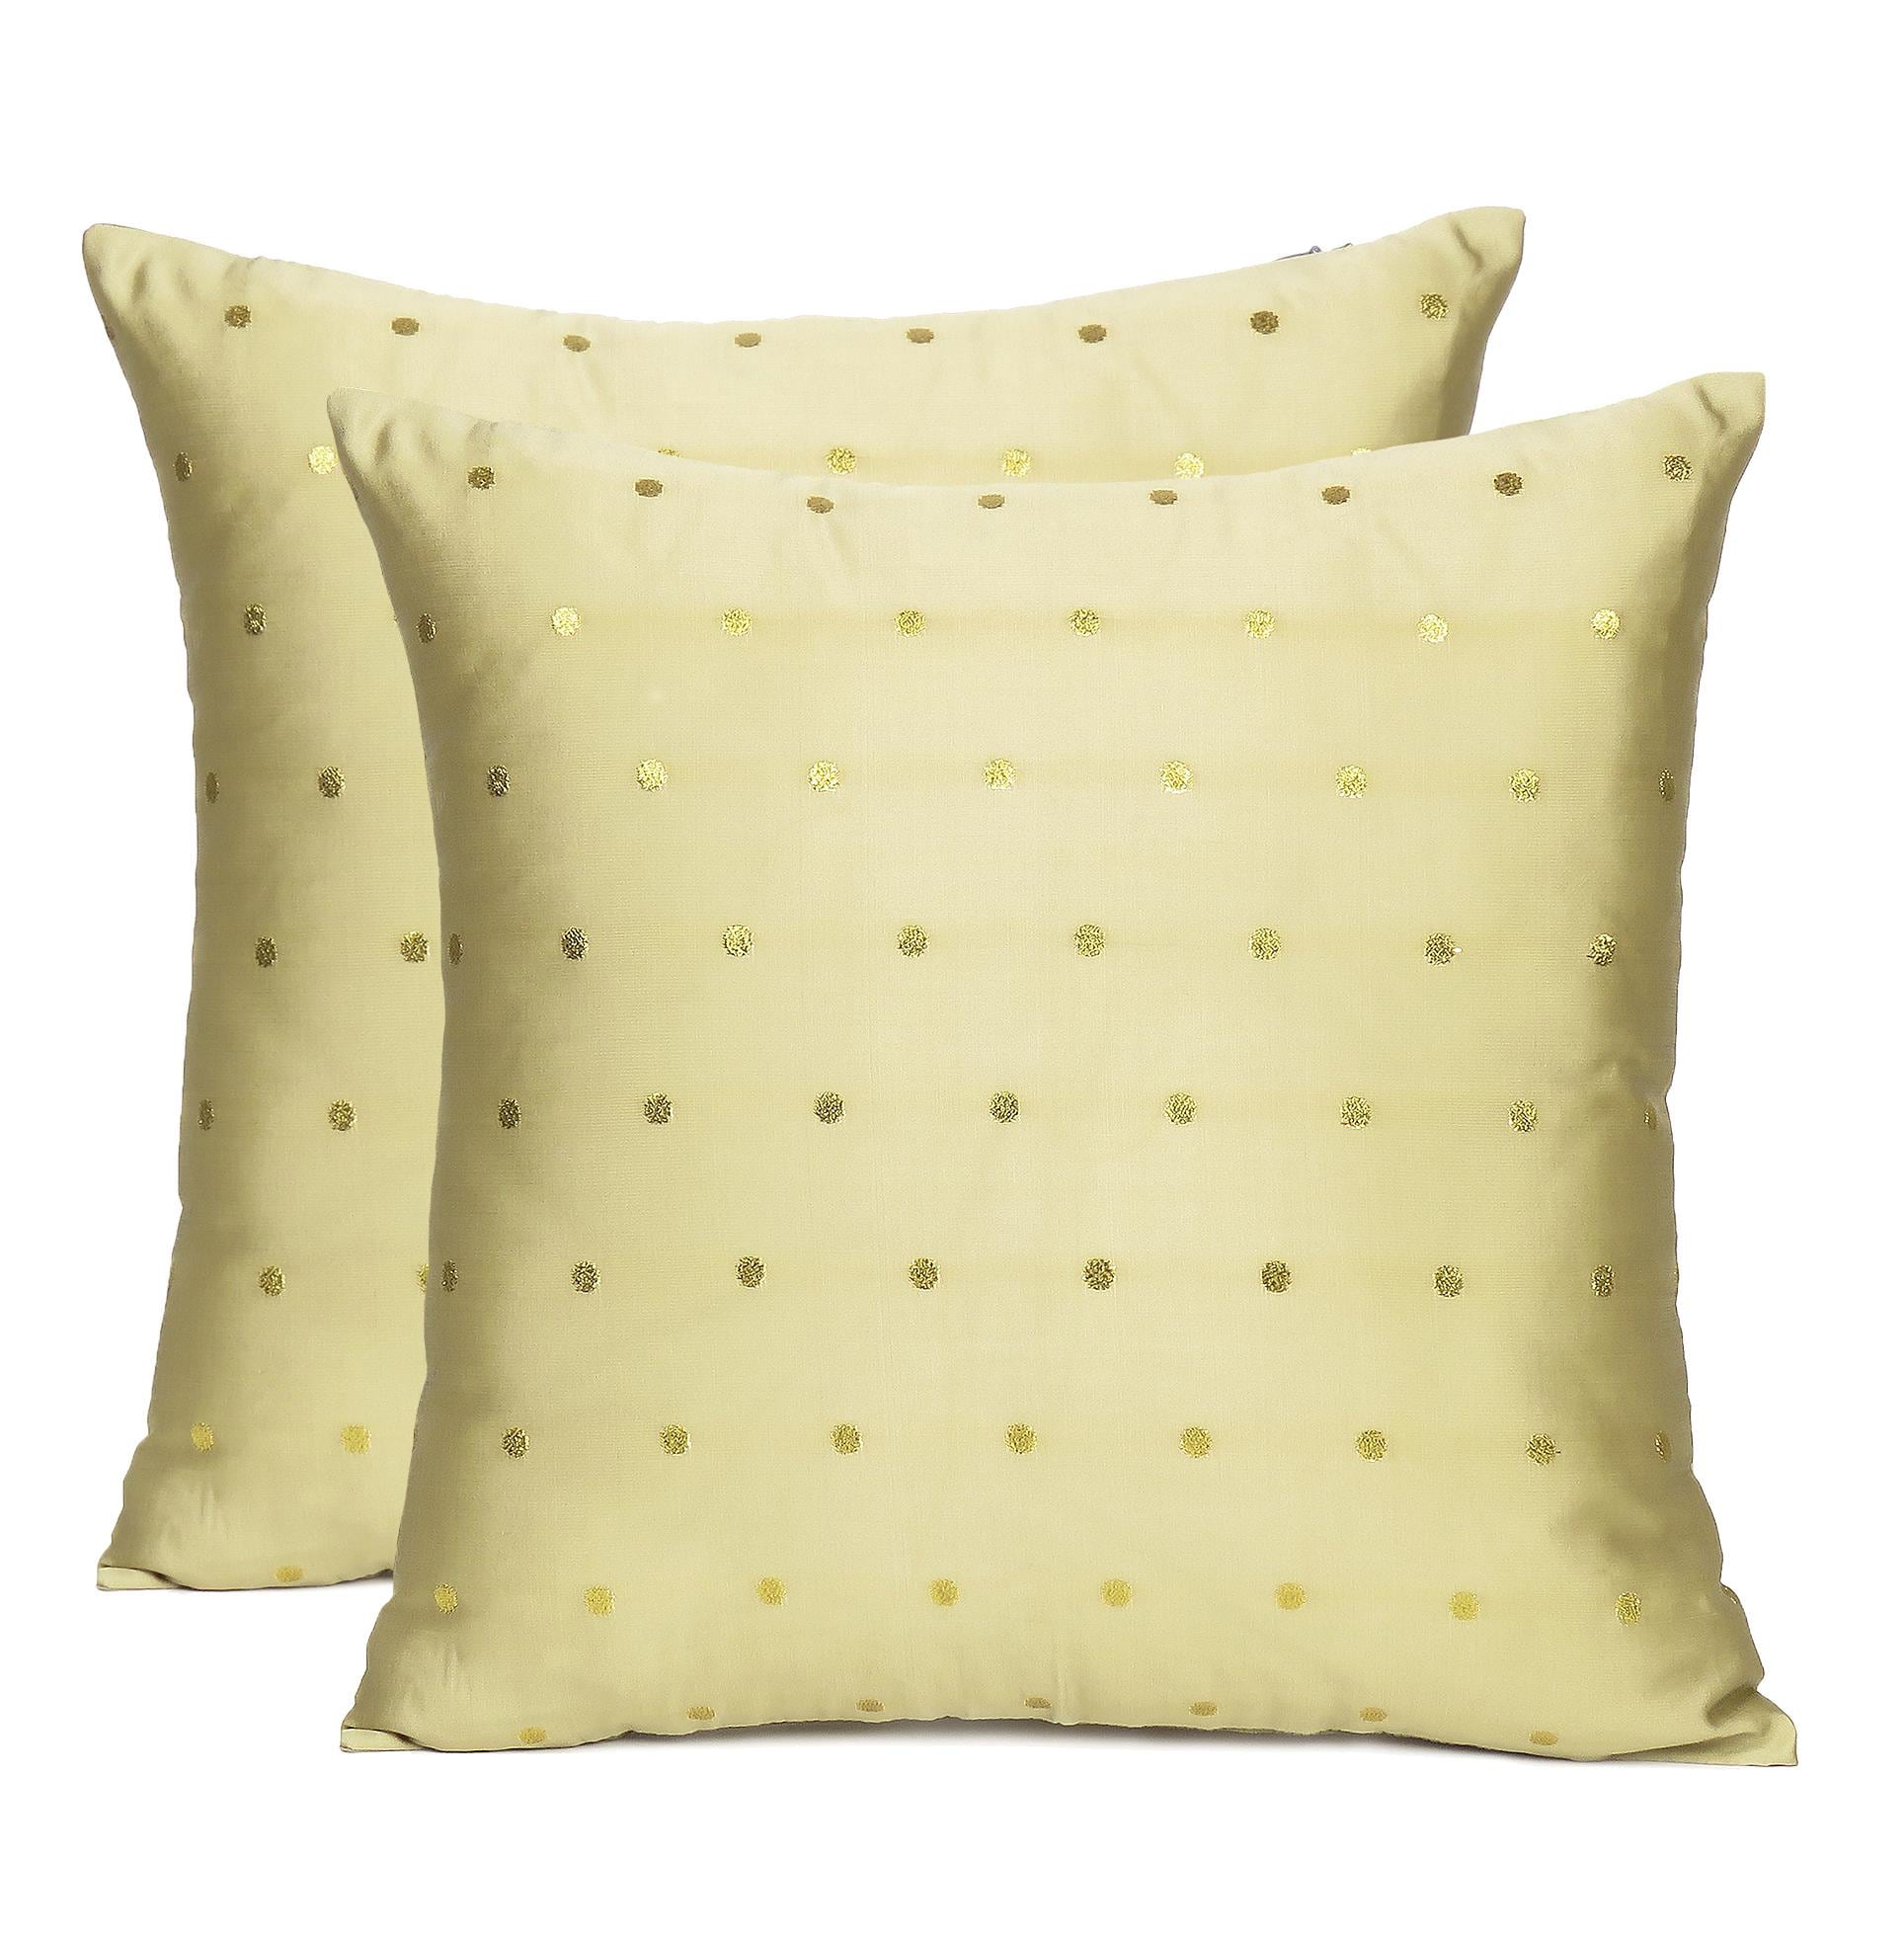 Gold Square Home Sofa Decor Throw Pillow Cushion Cover Case Pillowcase 18"x18" 